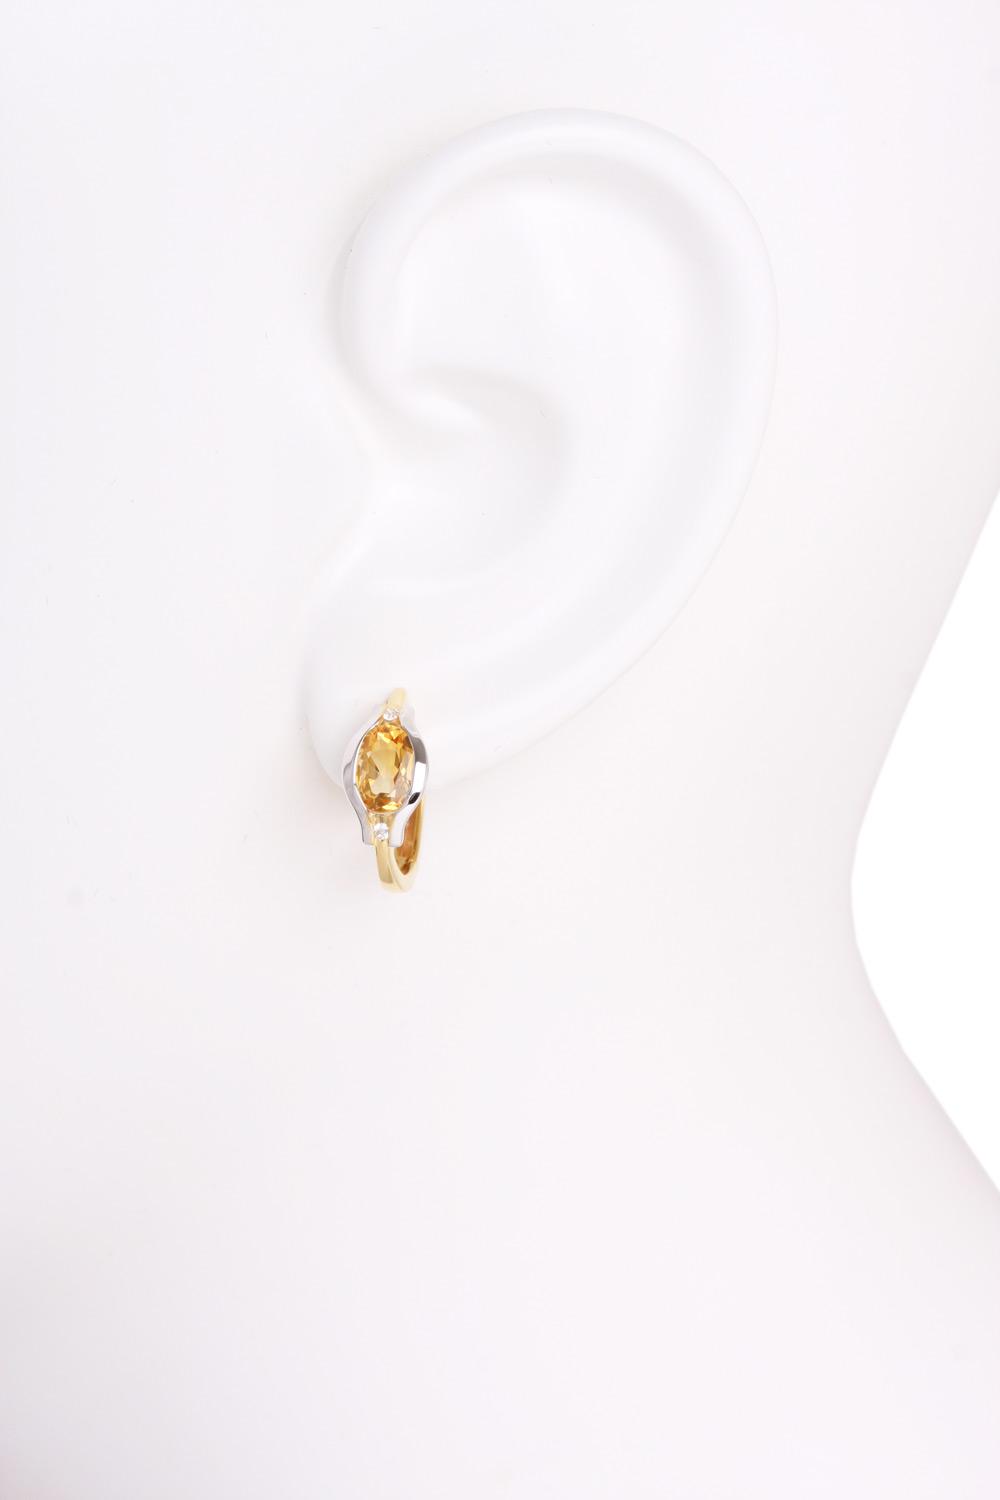 Athene - Damen Ohrringe Gold 375 Citrin Zirkonia Edelsteinohrringe